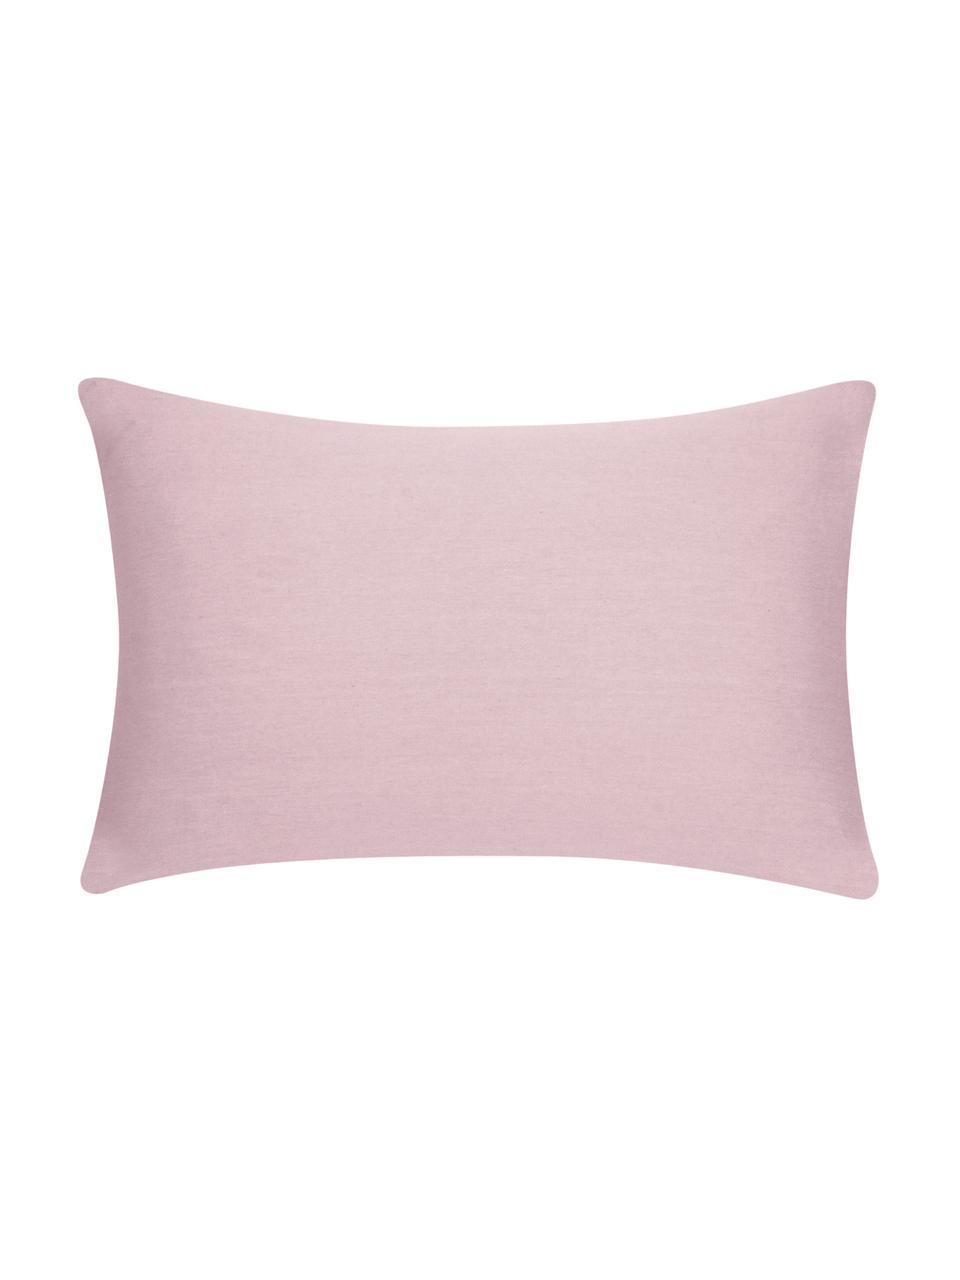 Federa arredo in cotone rosa Mads, 100% cotone, Rosa, Larg. 30 x Lung. 50 cm